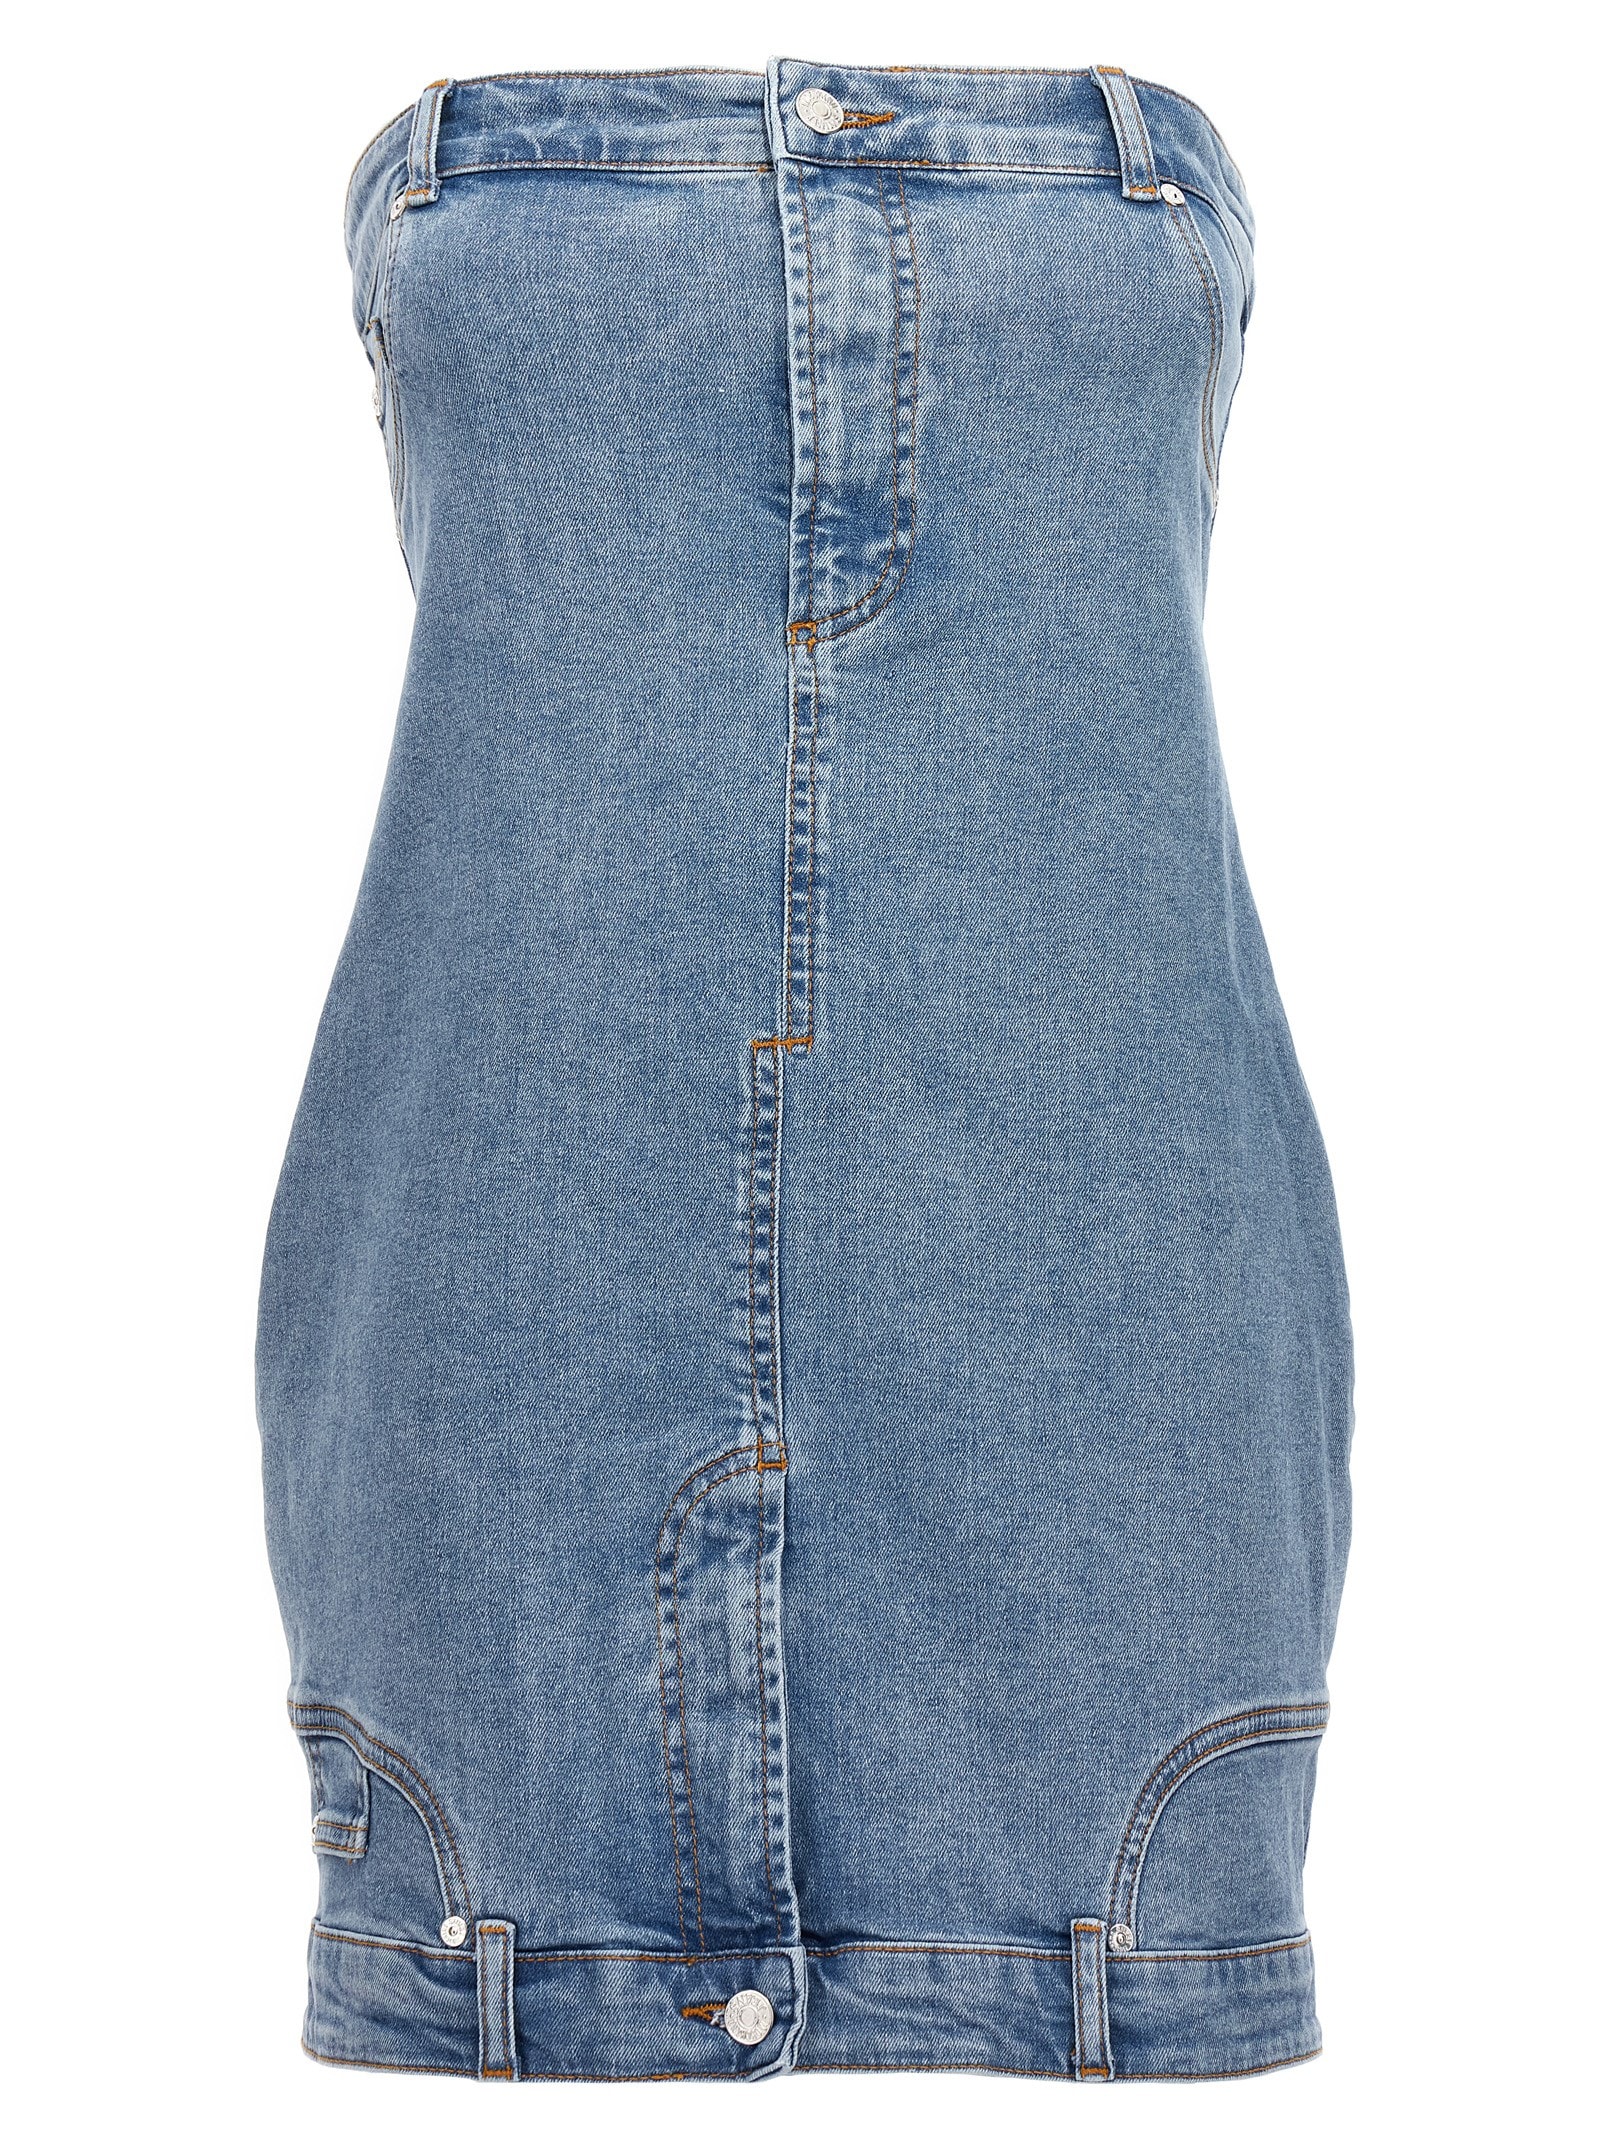 Shop M05ch1n0 Jeans Off-the-shoulder Denim Dress